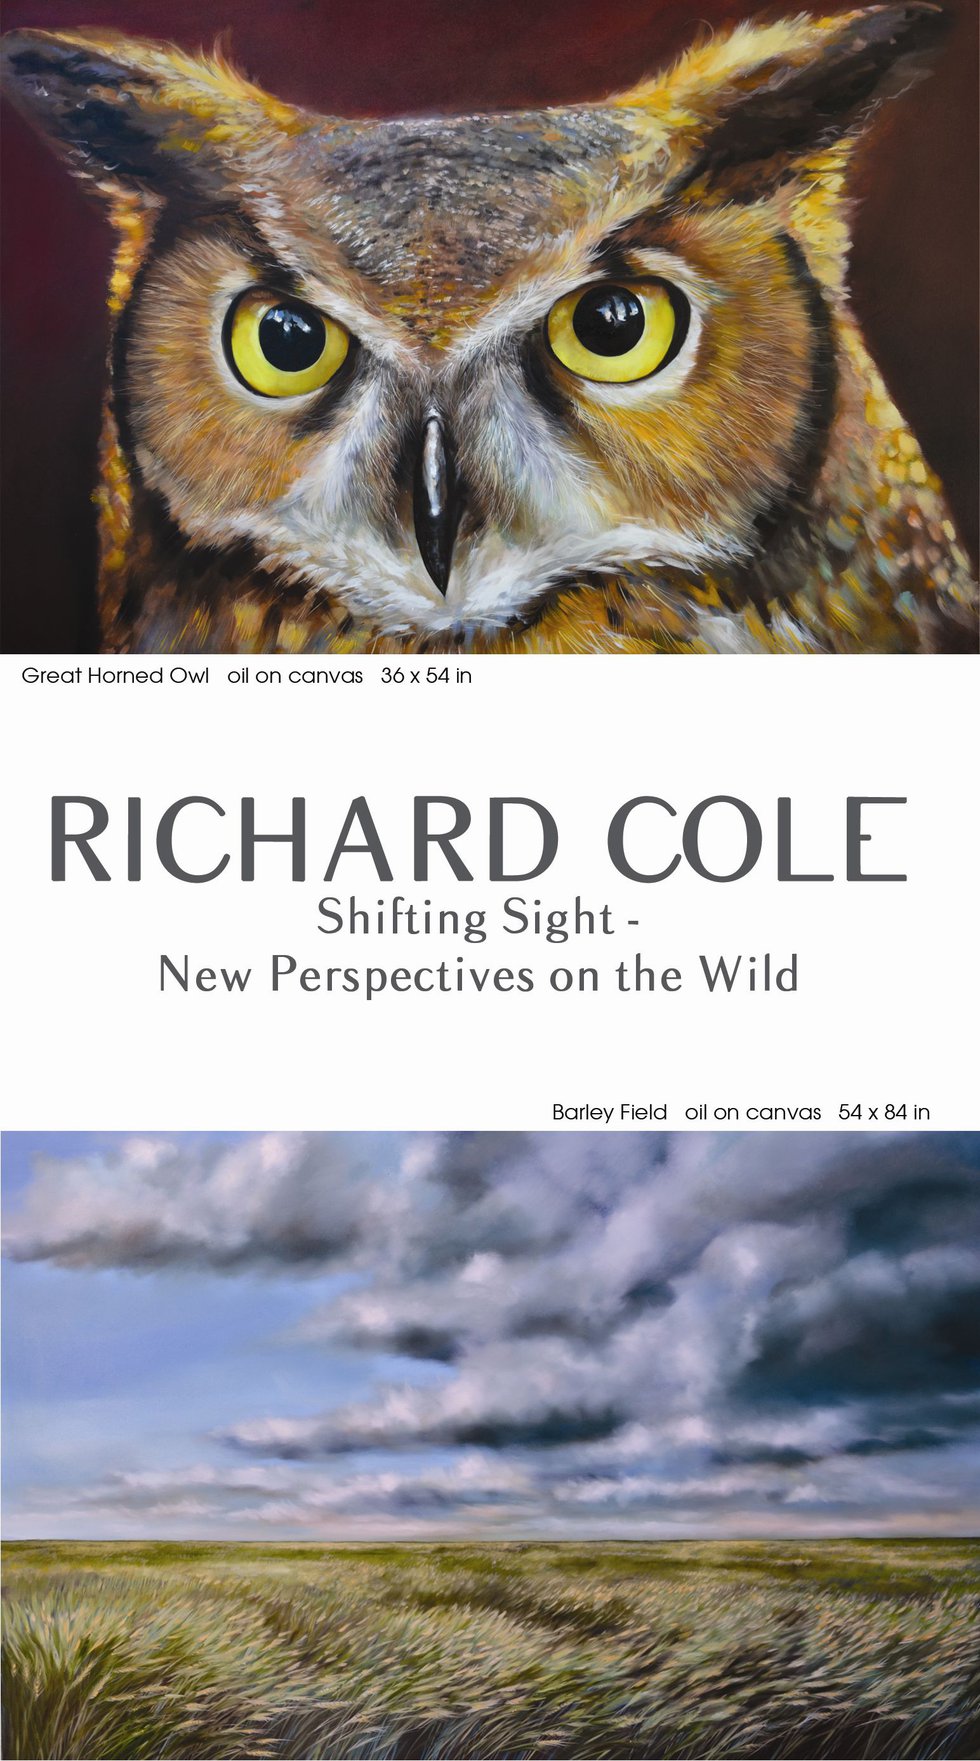 Richard Cole poster